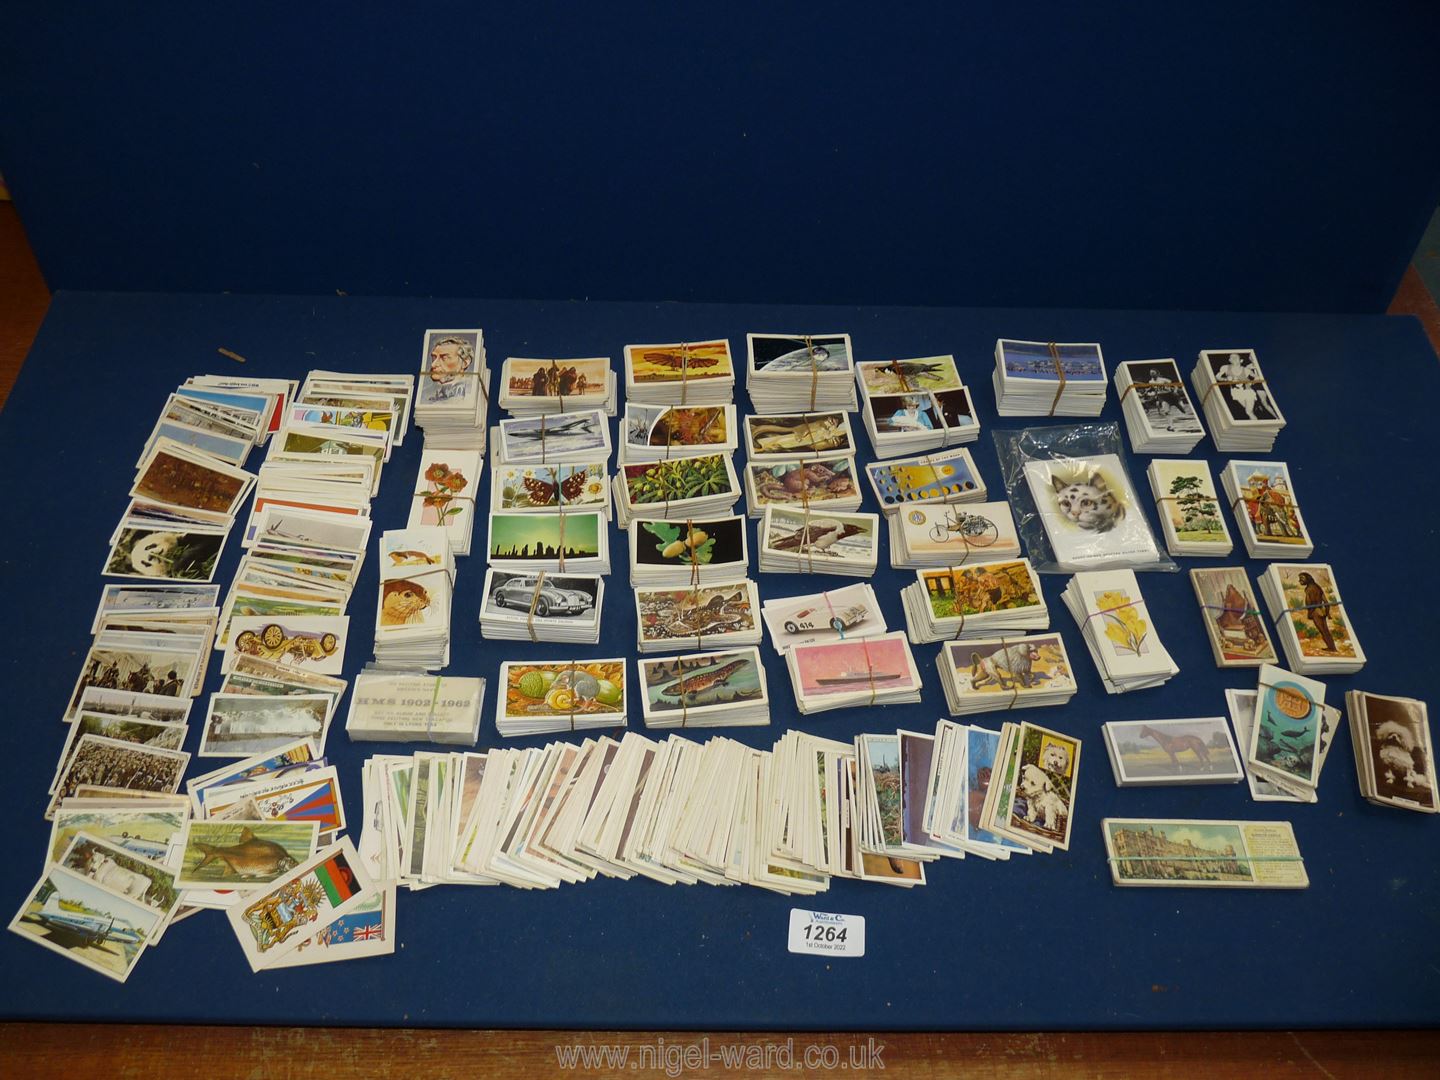 A large quantity of tea and cigarette cards including Ty-phoo, Brooke Bond, Craven black cat,